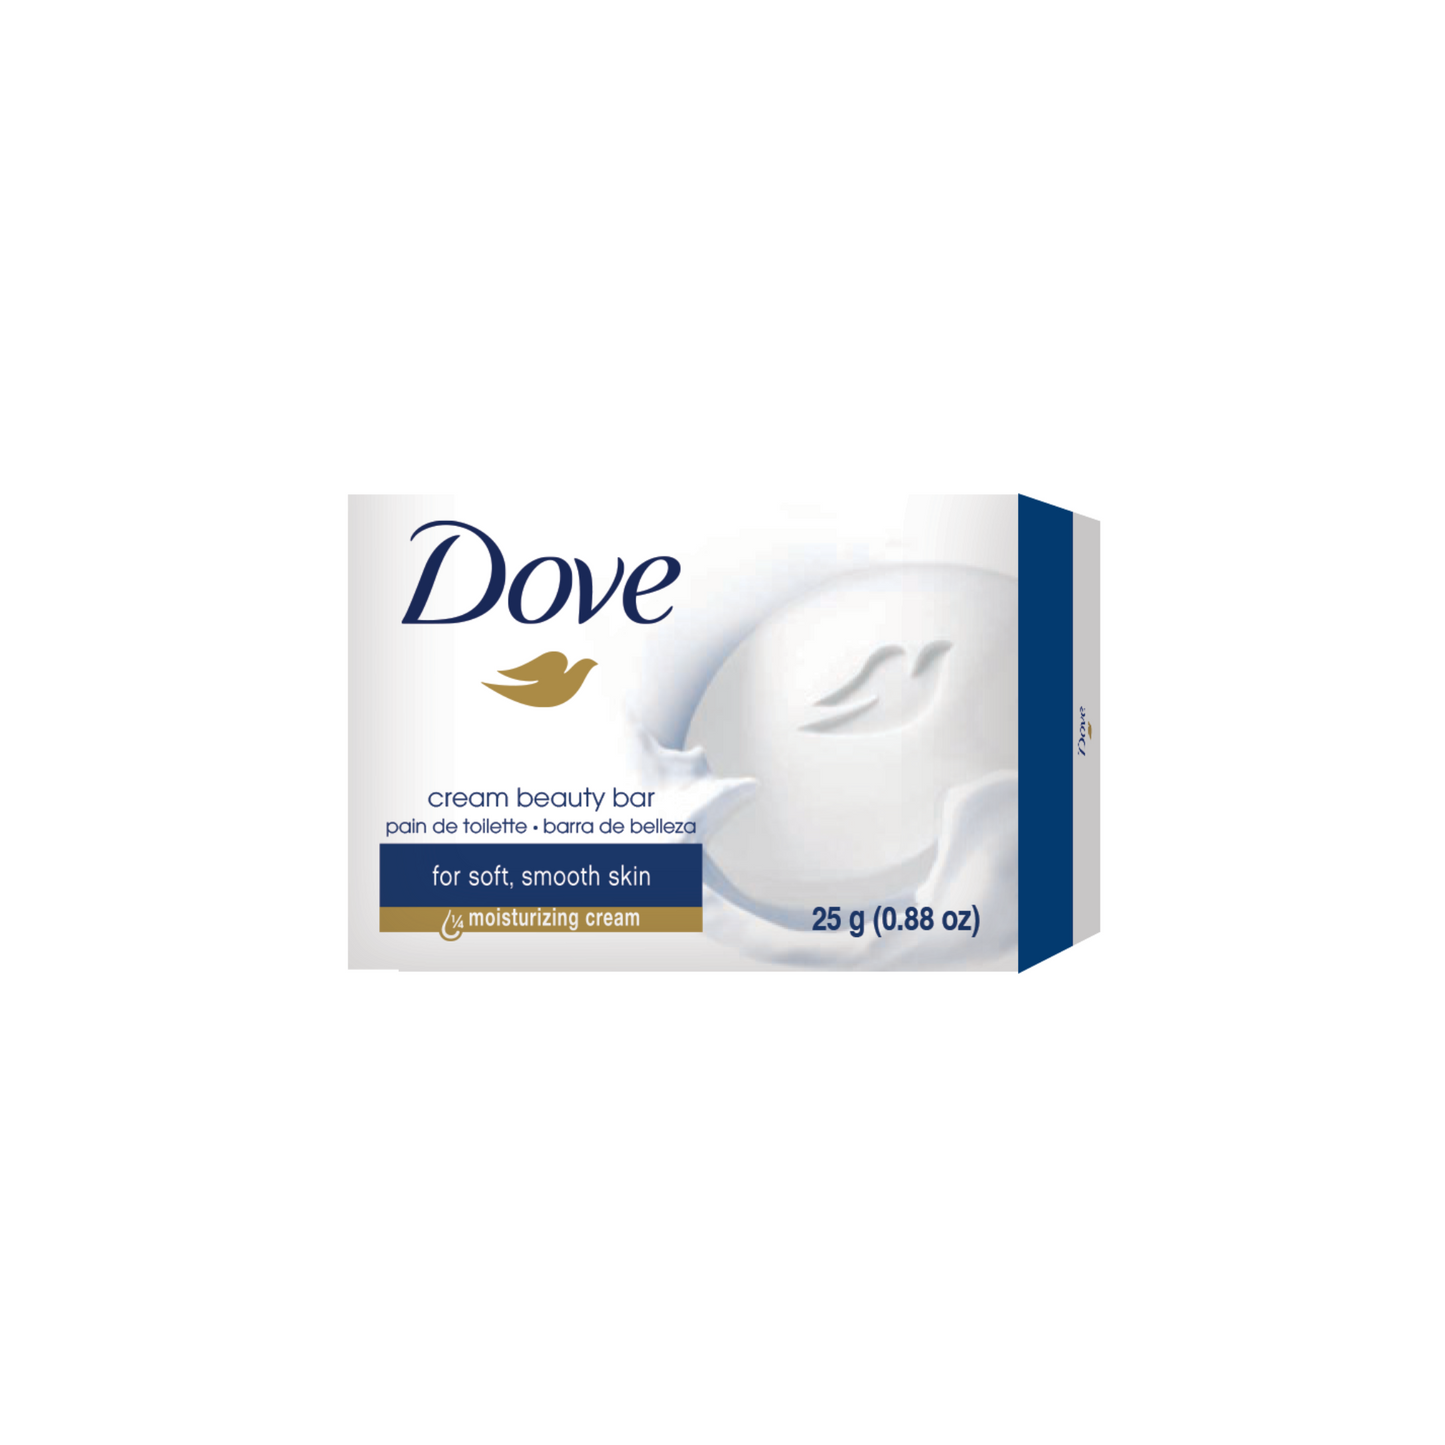 Dove Cream Beauty Bar Soap - 25g